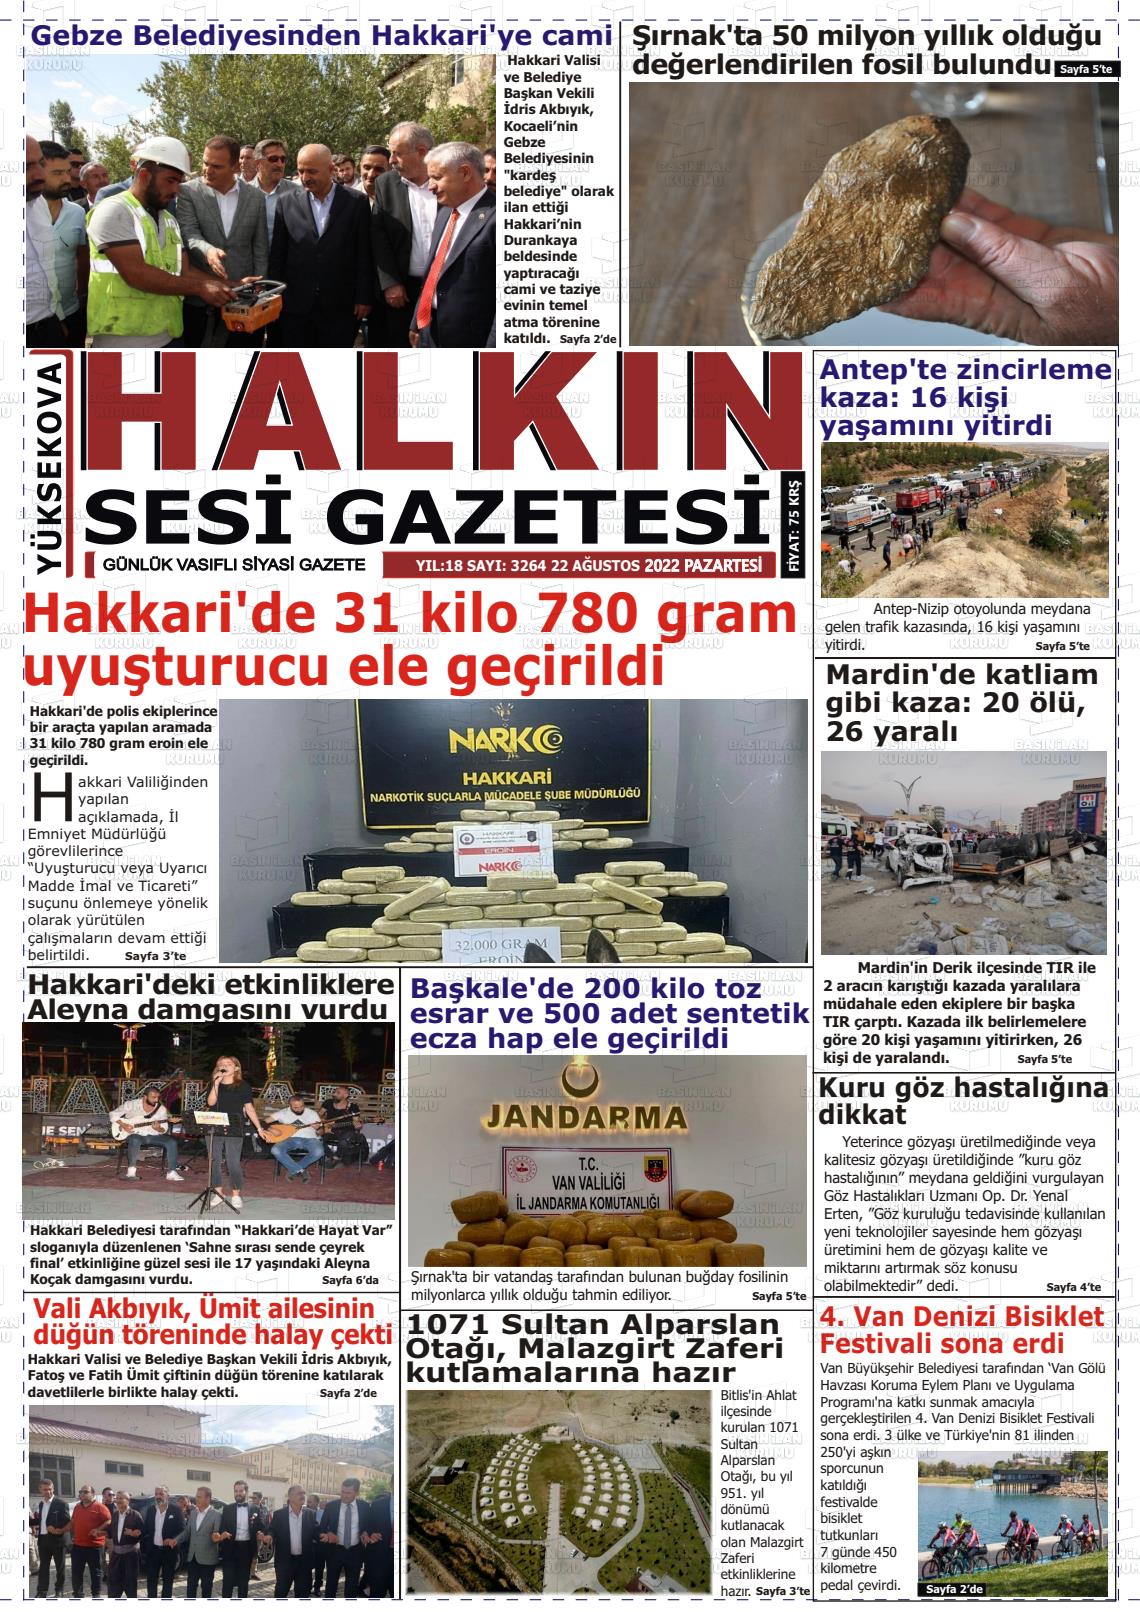 22 Ağustos 2022 Yüksekova Halkın Sesi Gazete Manşeti